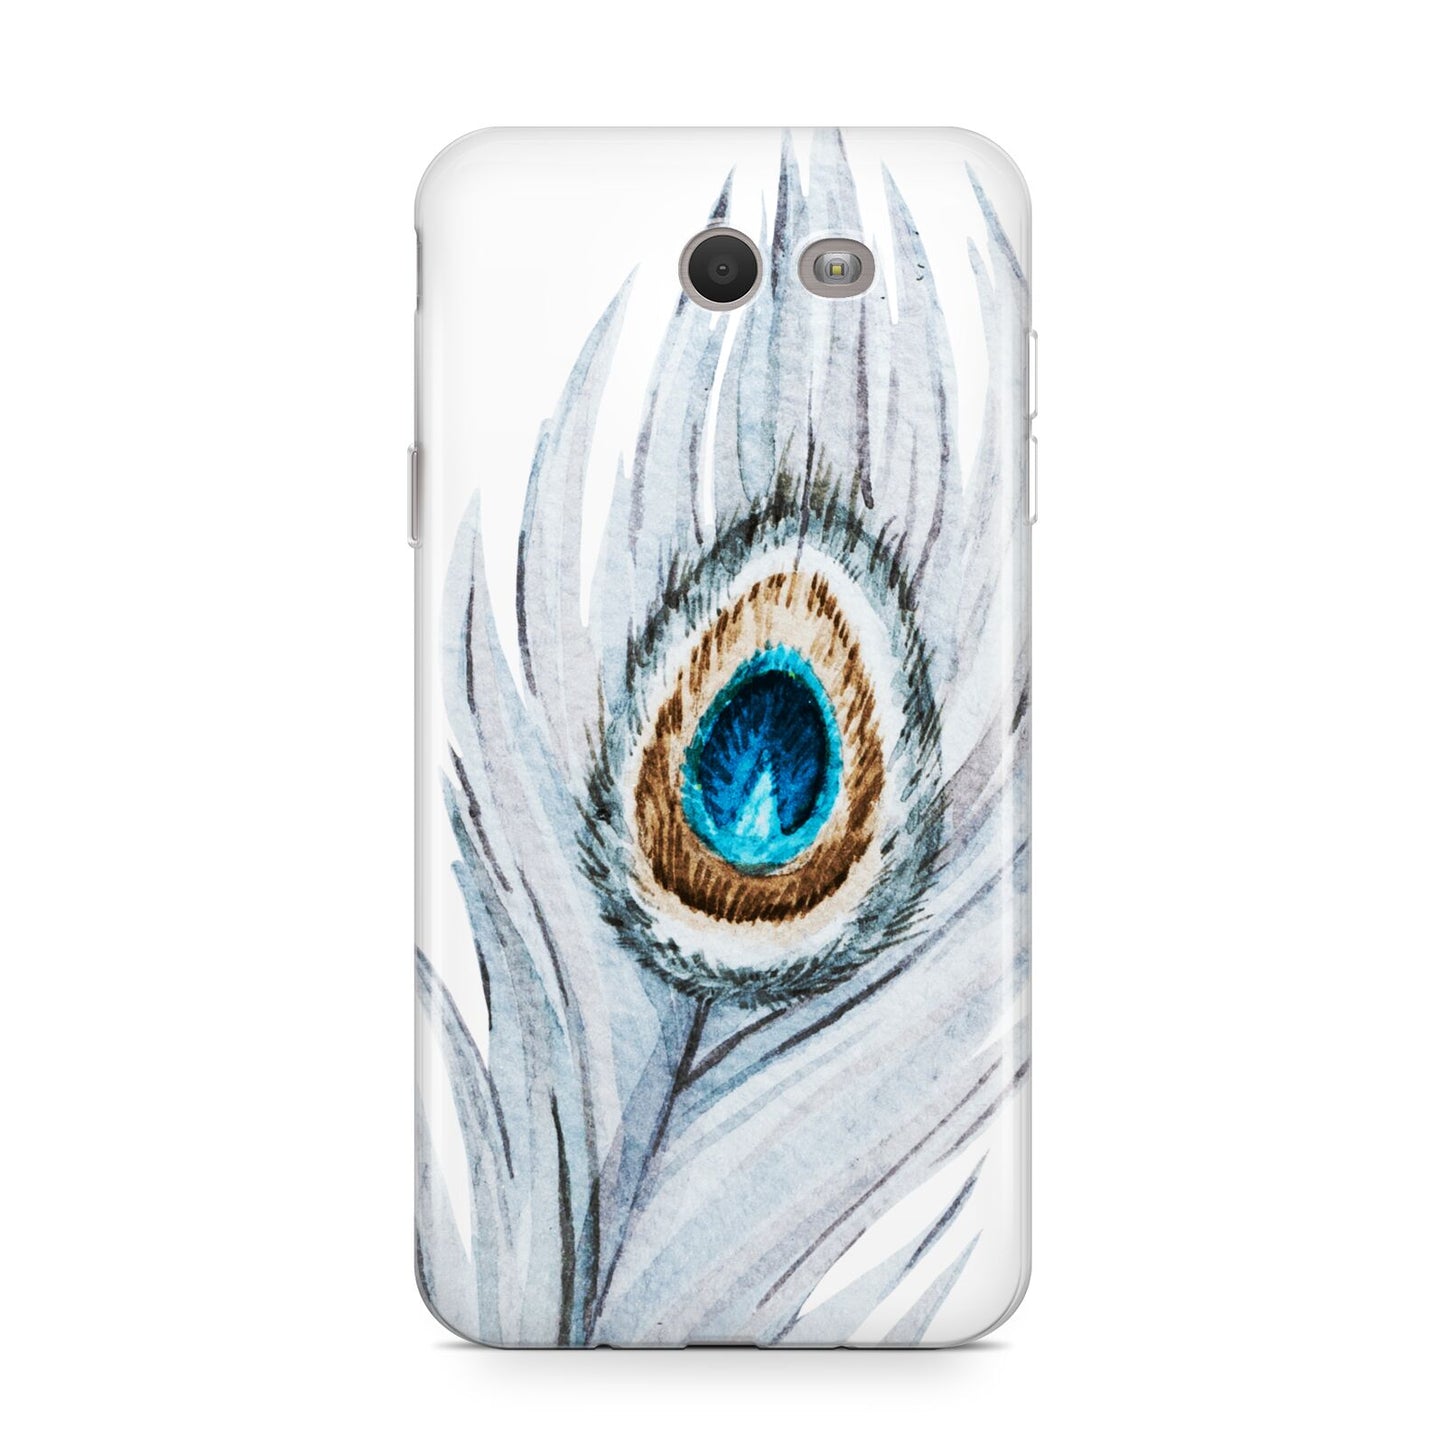 Peacock Samsung Galaxy J7 2017 Case